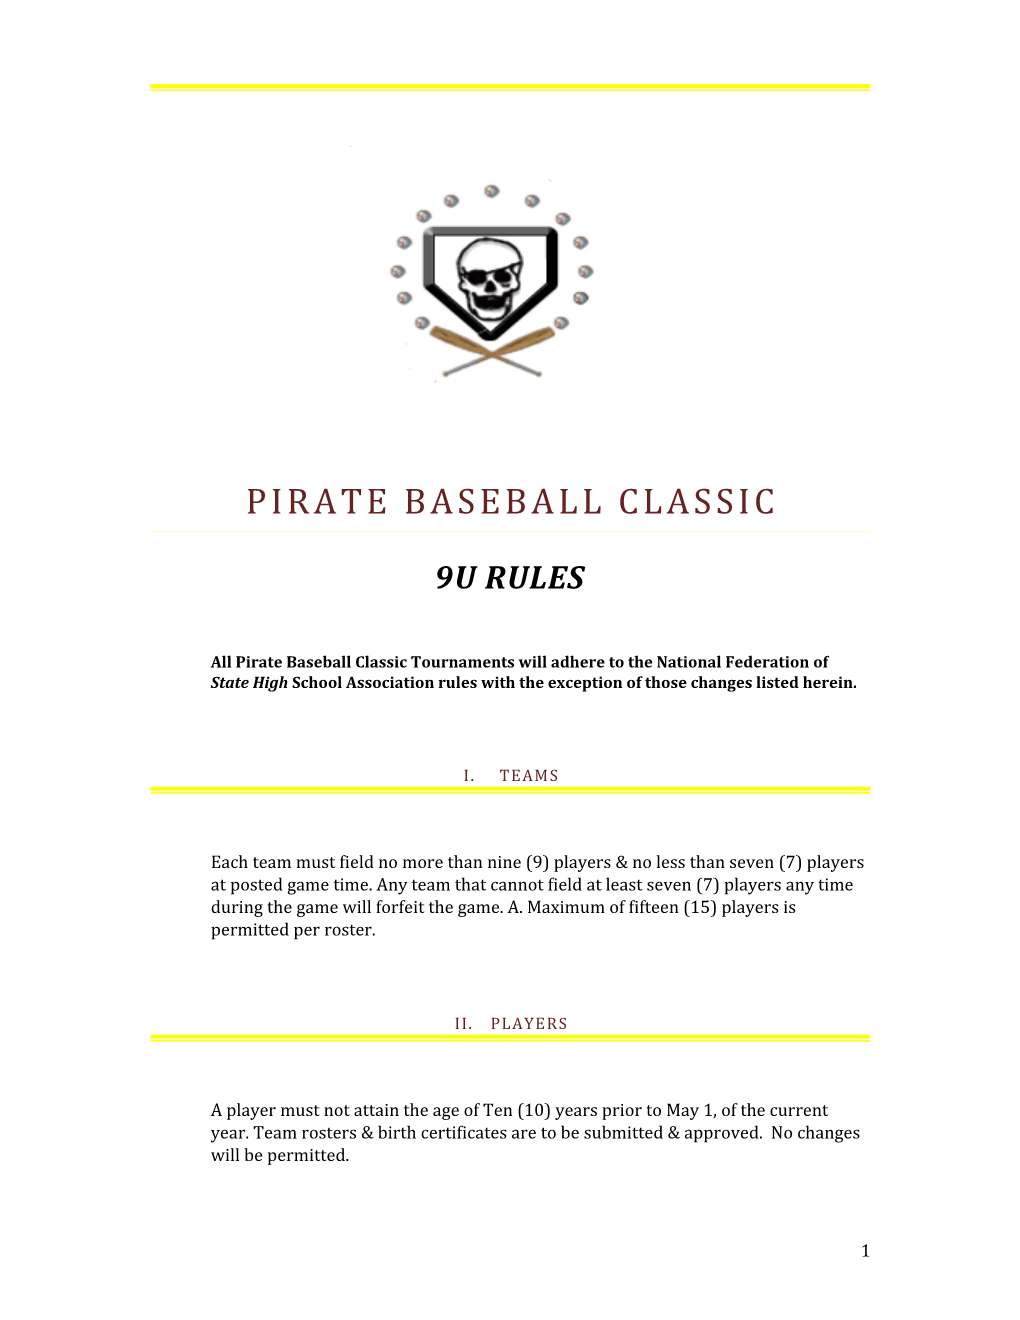 Pirate Baseball Classic